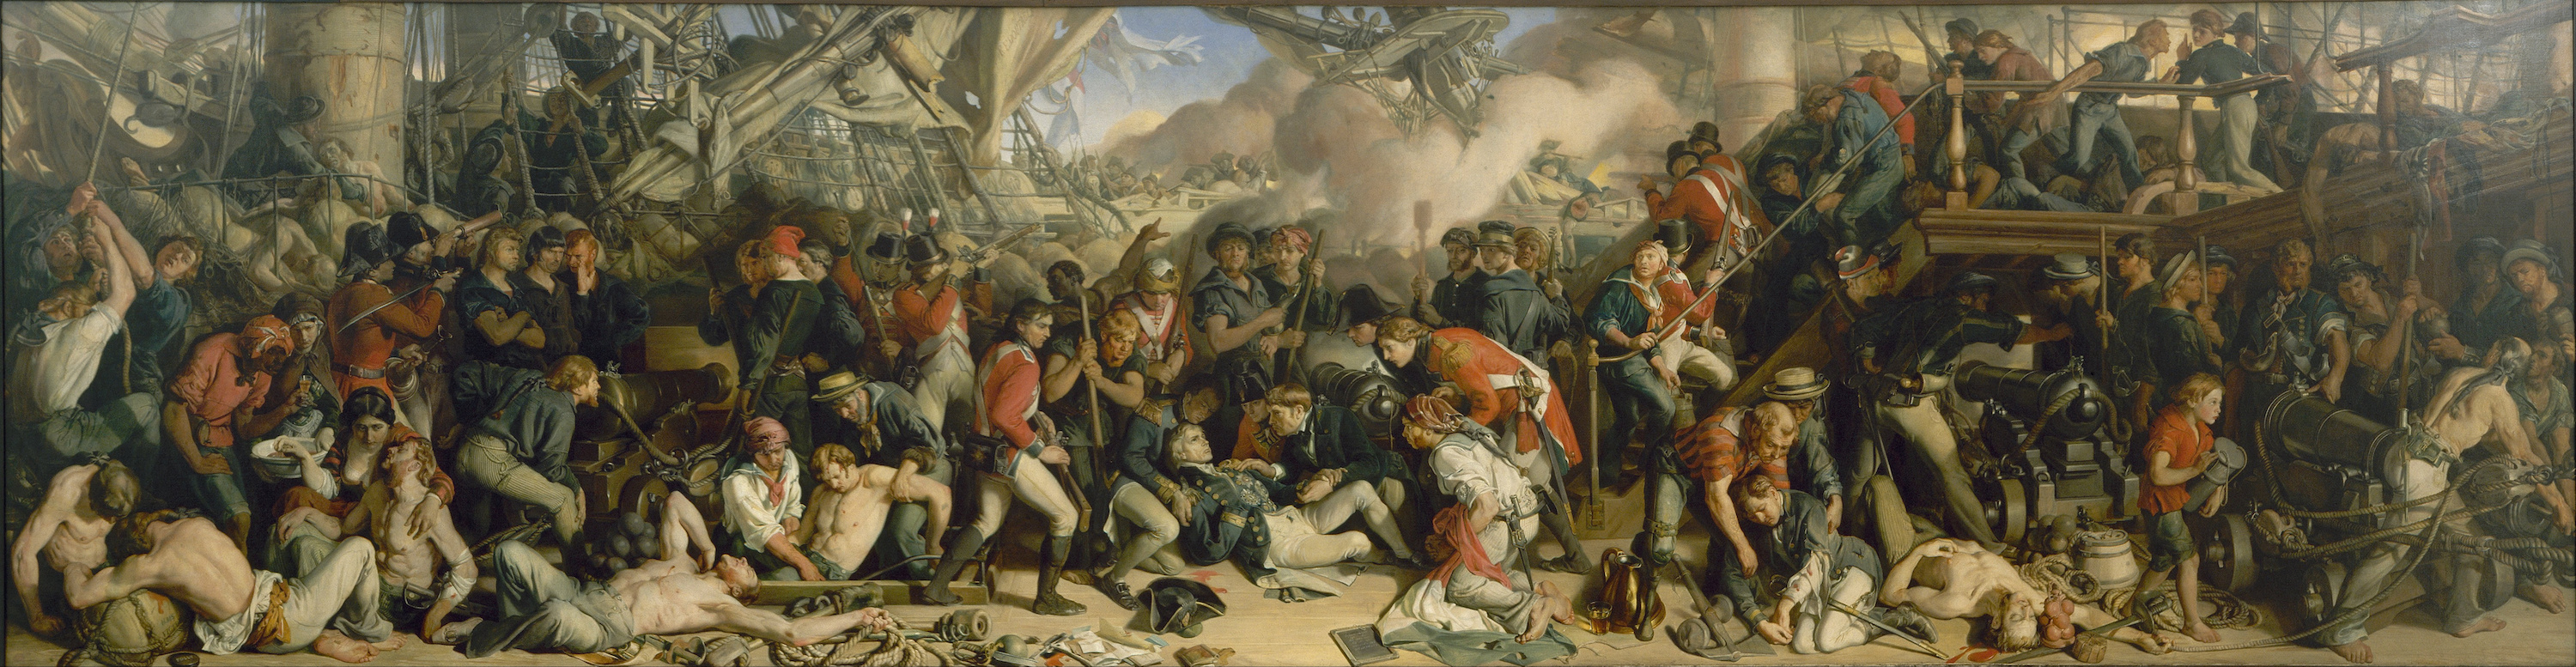 La Morte di Nelson by Daniel Maclise - 1859–1861 - 98,5 cm x 353 cm 